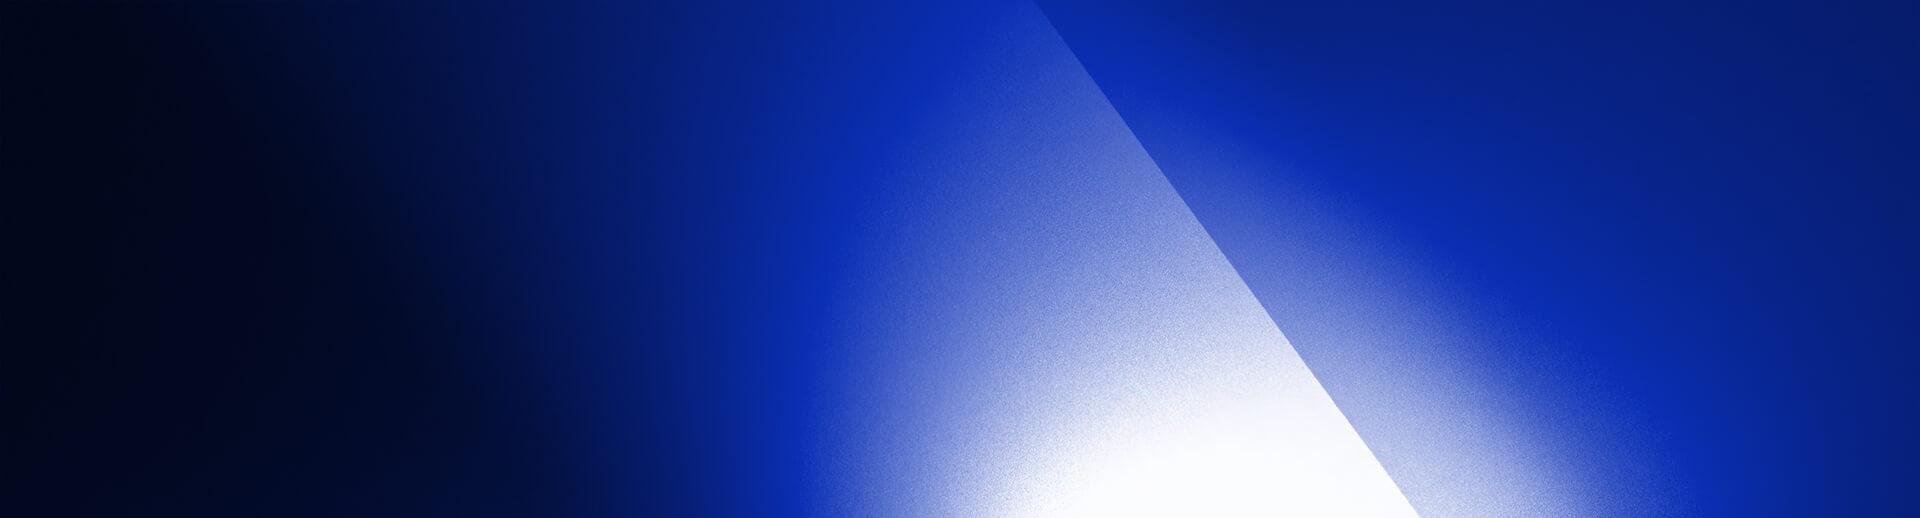 rra-background-blue-8-2021.jpg